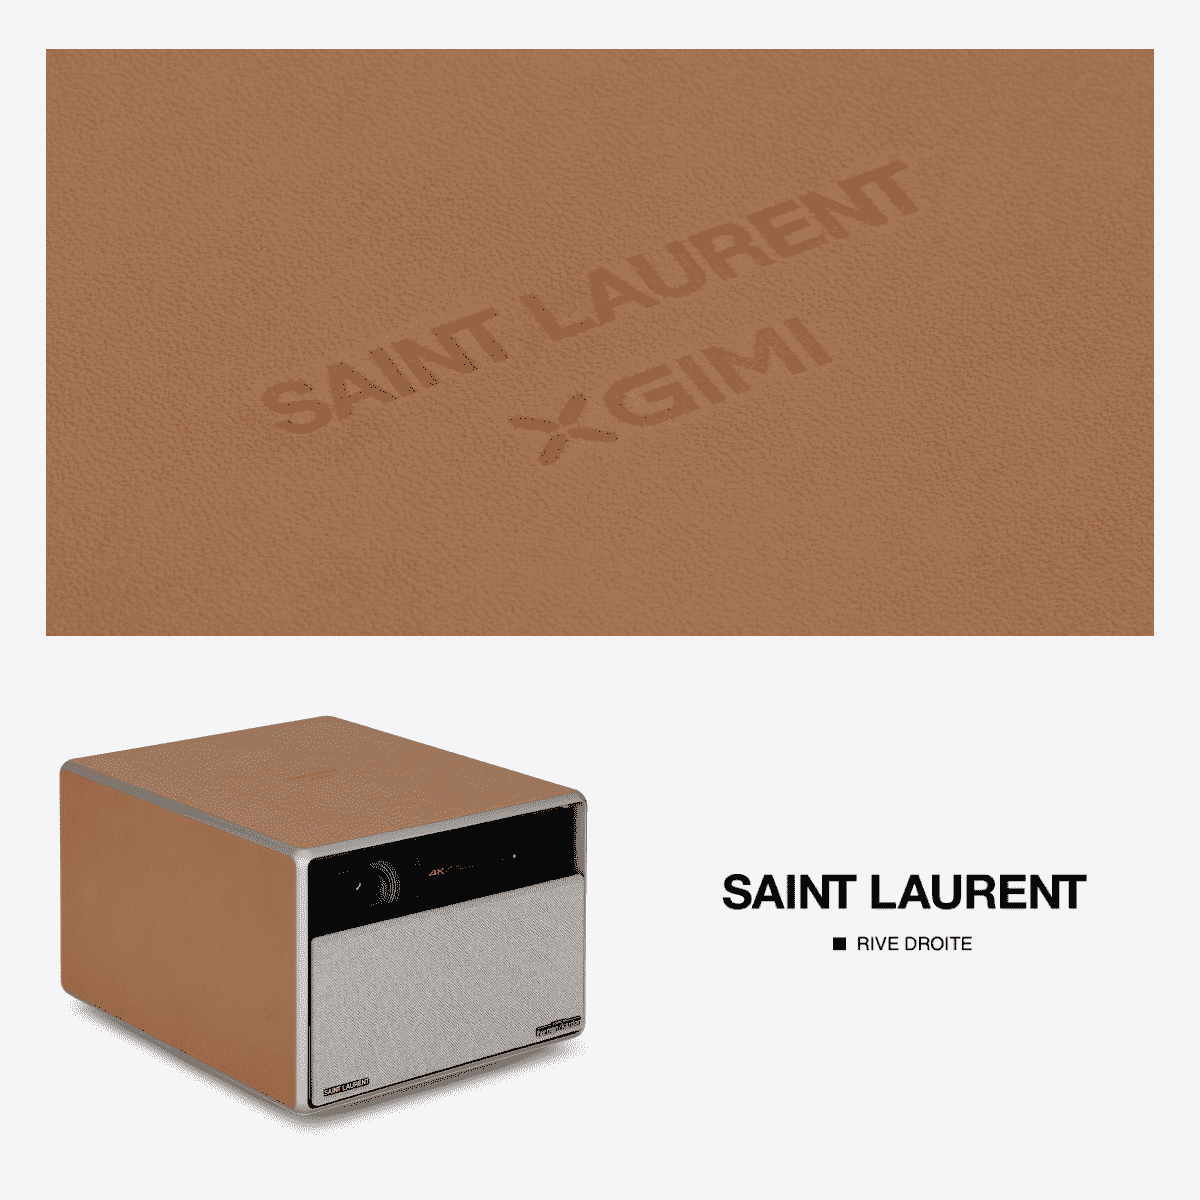 Saint Laurent Rive Droite and XGIMI Special Collaboration HORIZON Ultra